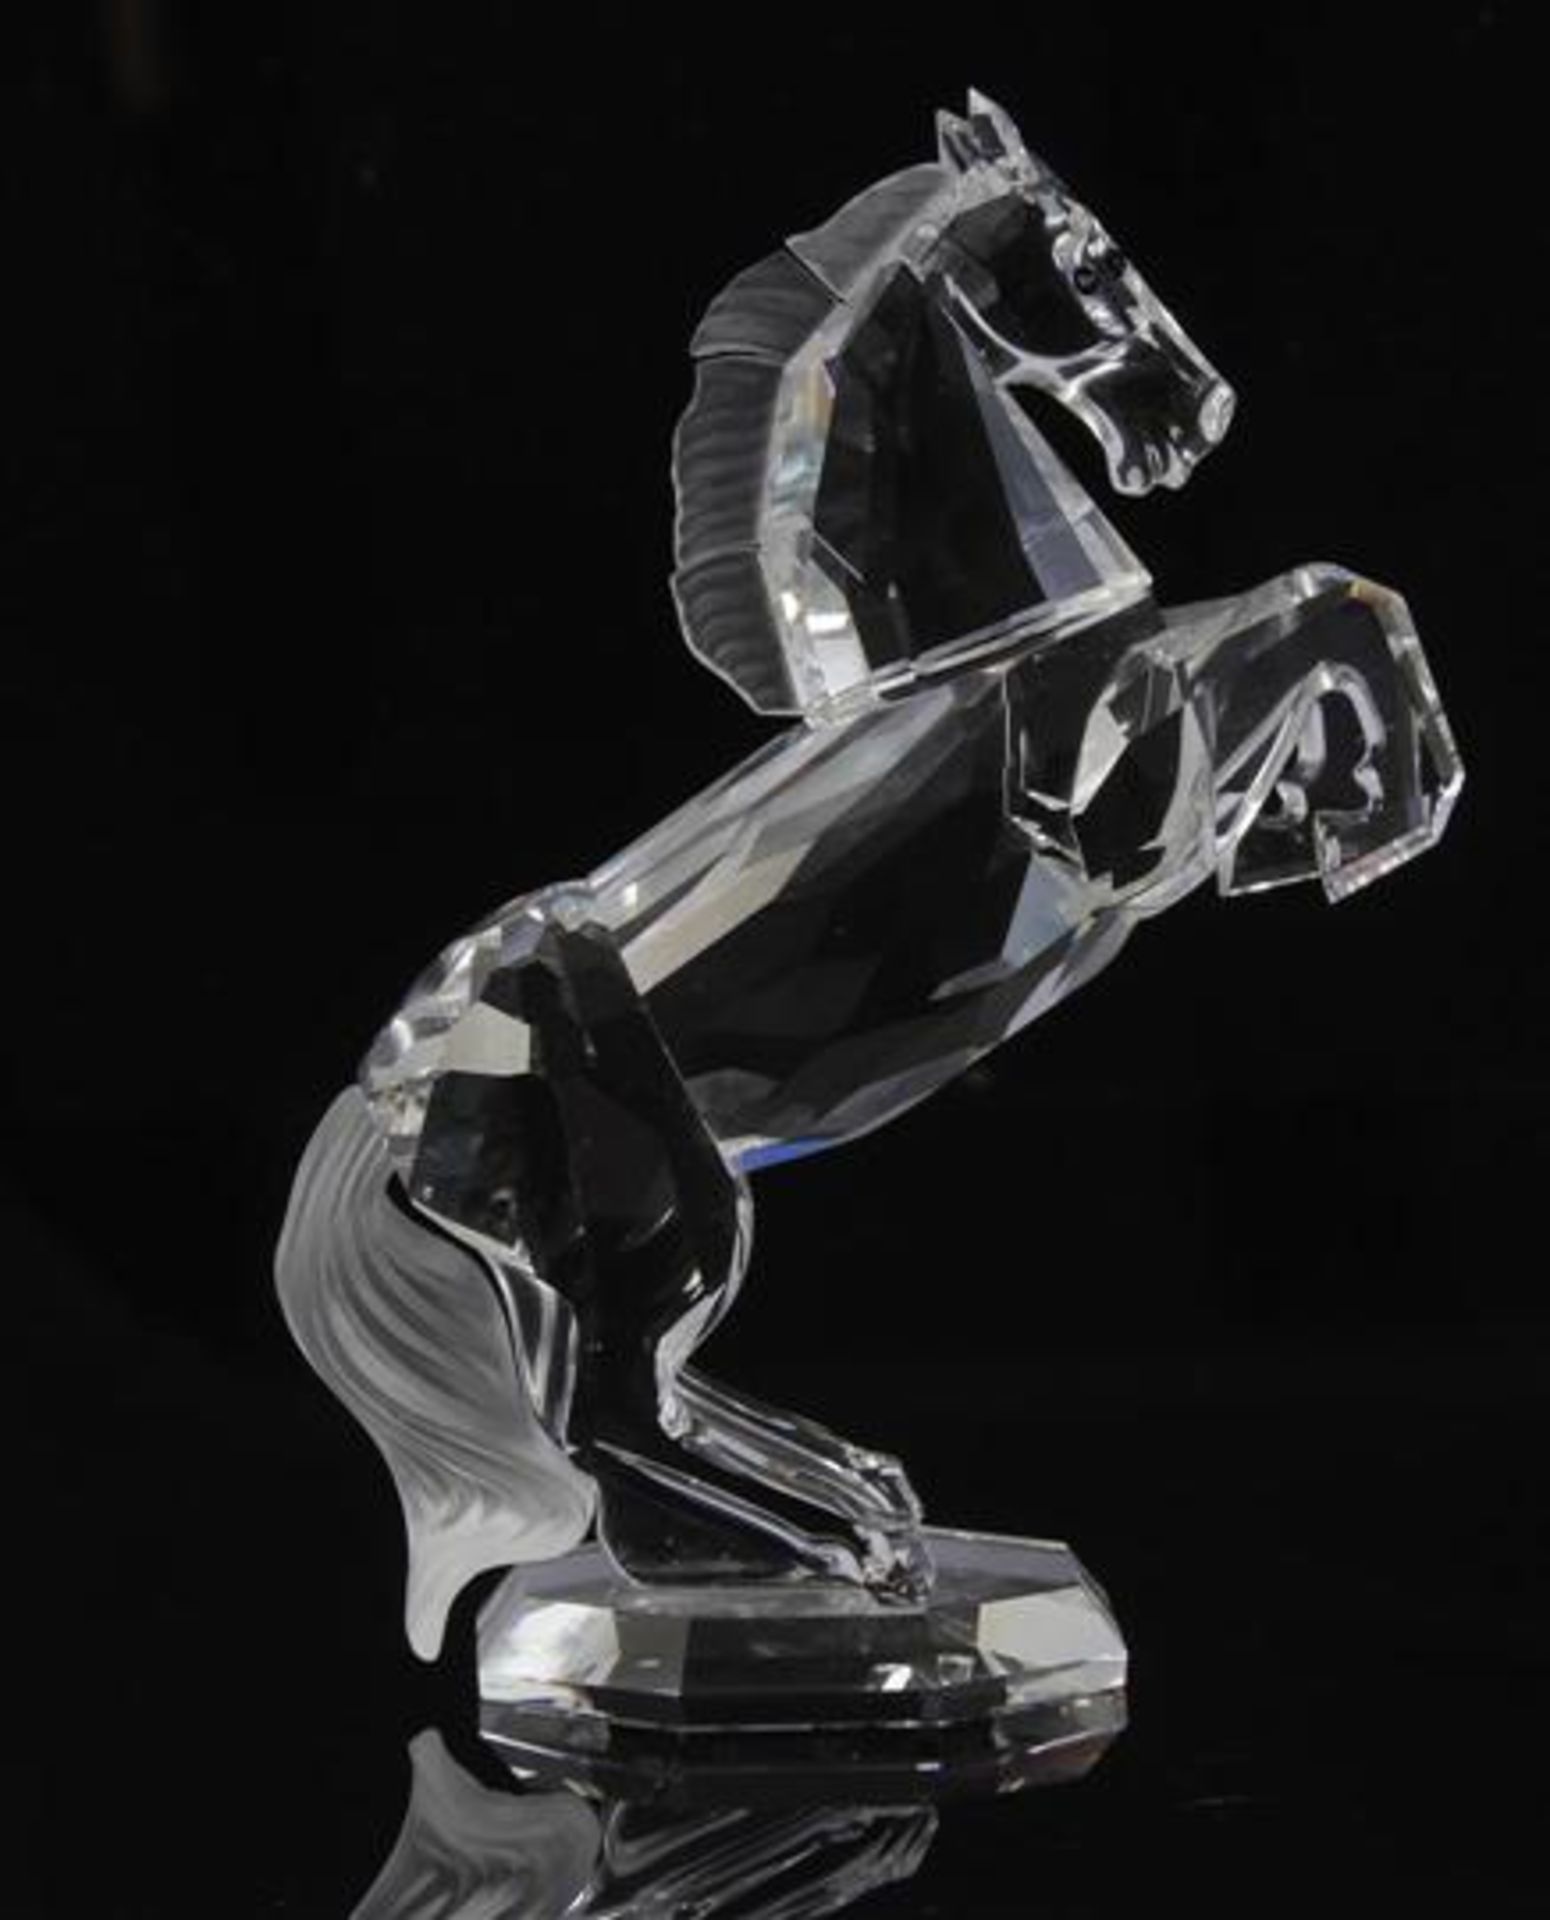 Swarovski crystal prancing horse 10.5 cm high with box